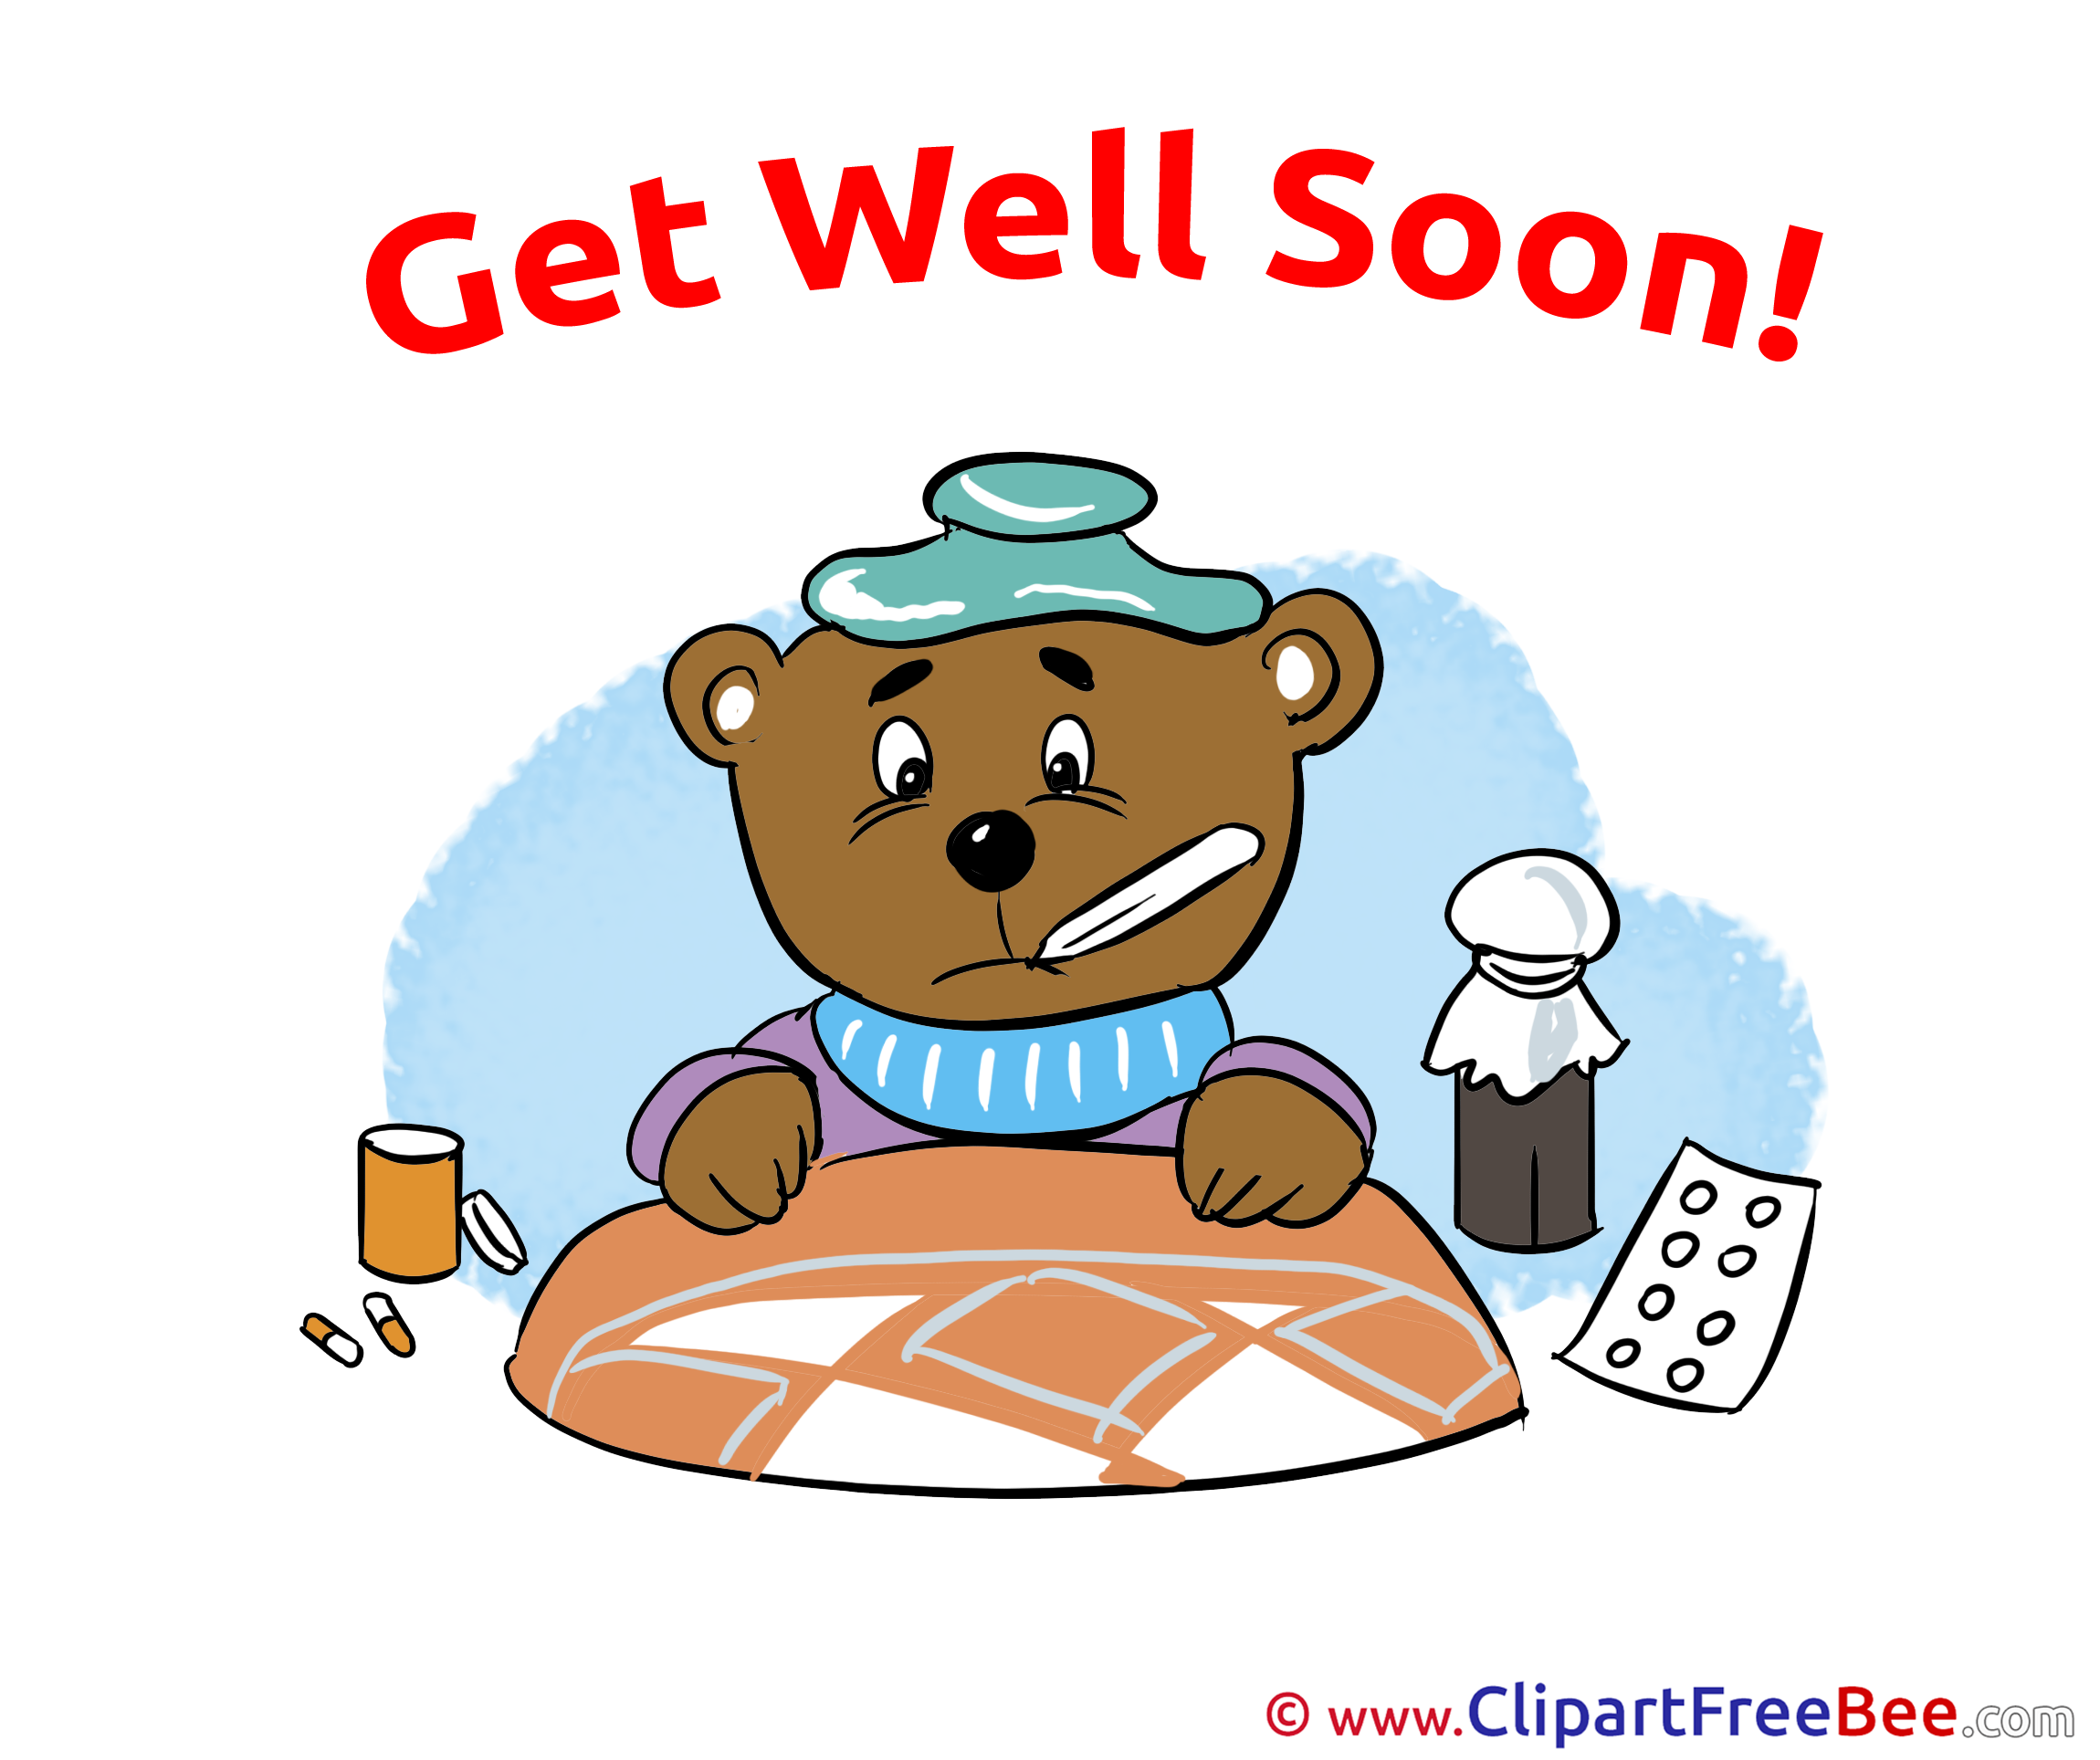 Medicine Bear Pills Clipart Get Well Soon free Images.